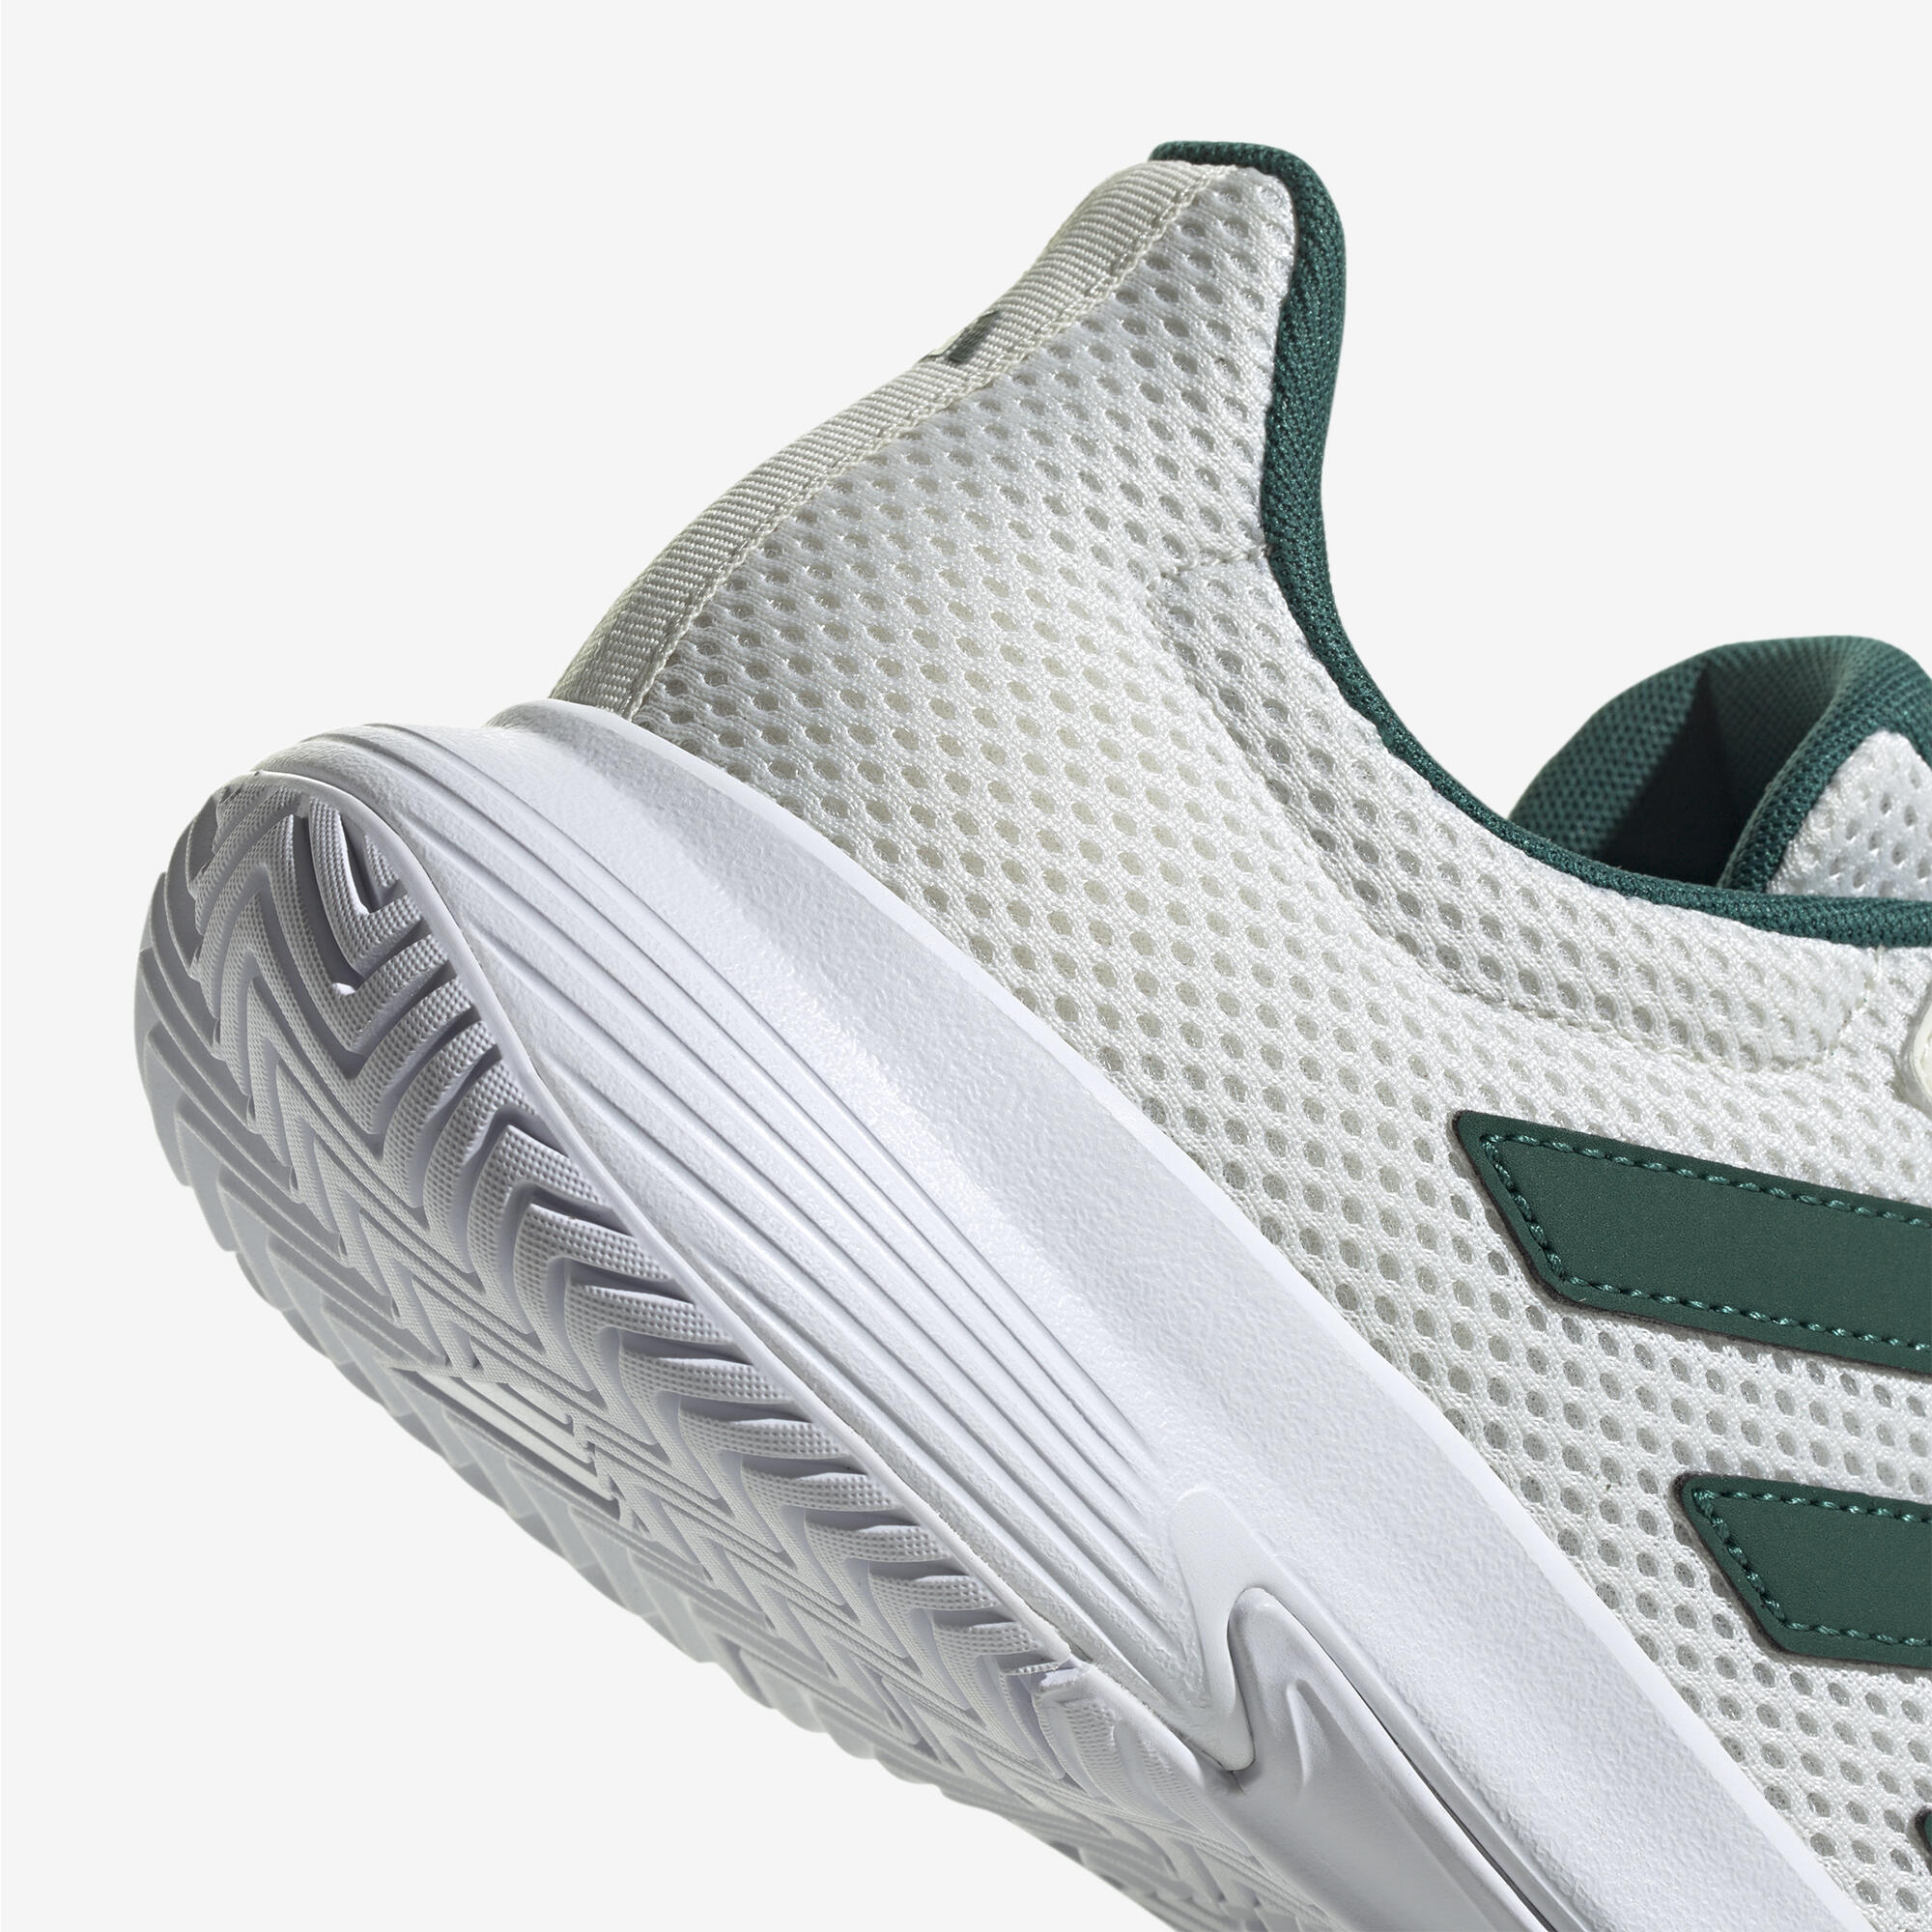 Men's Multicourt Tennis Shoes Gamespec - White/Green 5/7